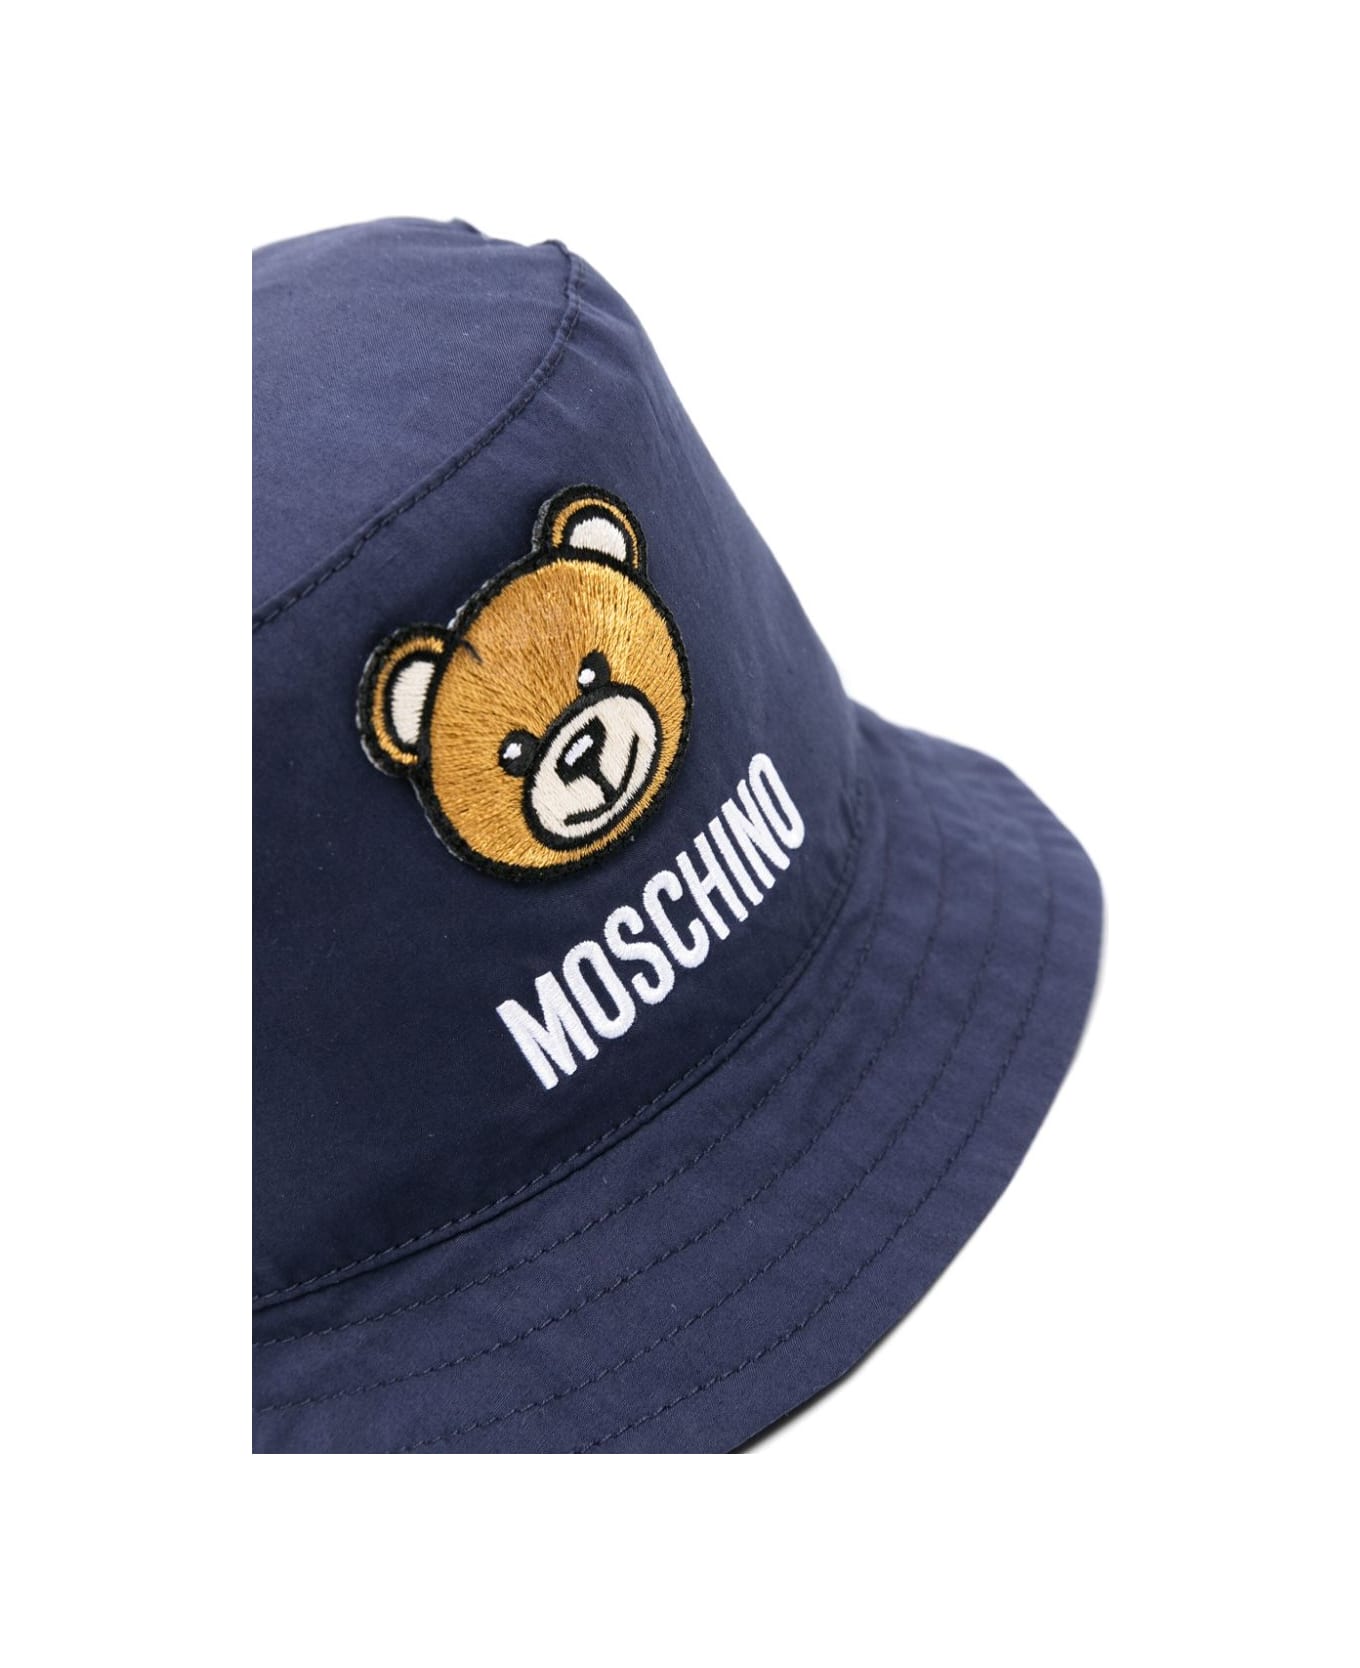 Moschino Cappello Con Logo - Blue アクセサリー＆ギフト